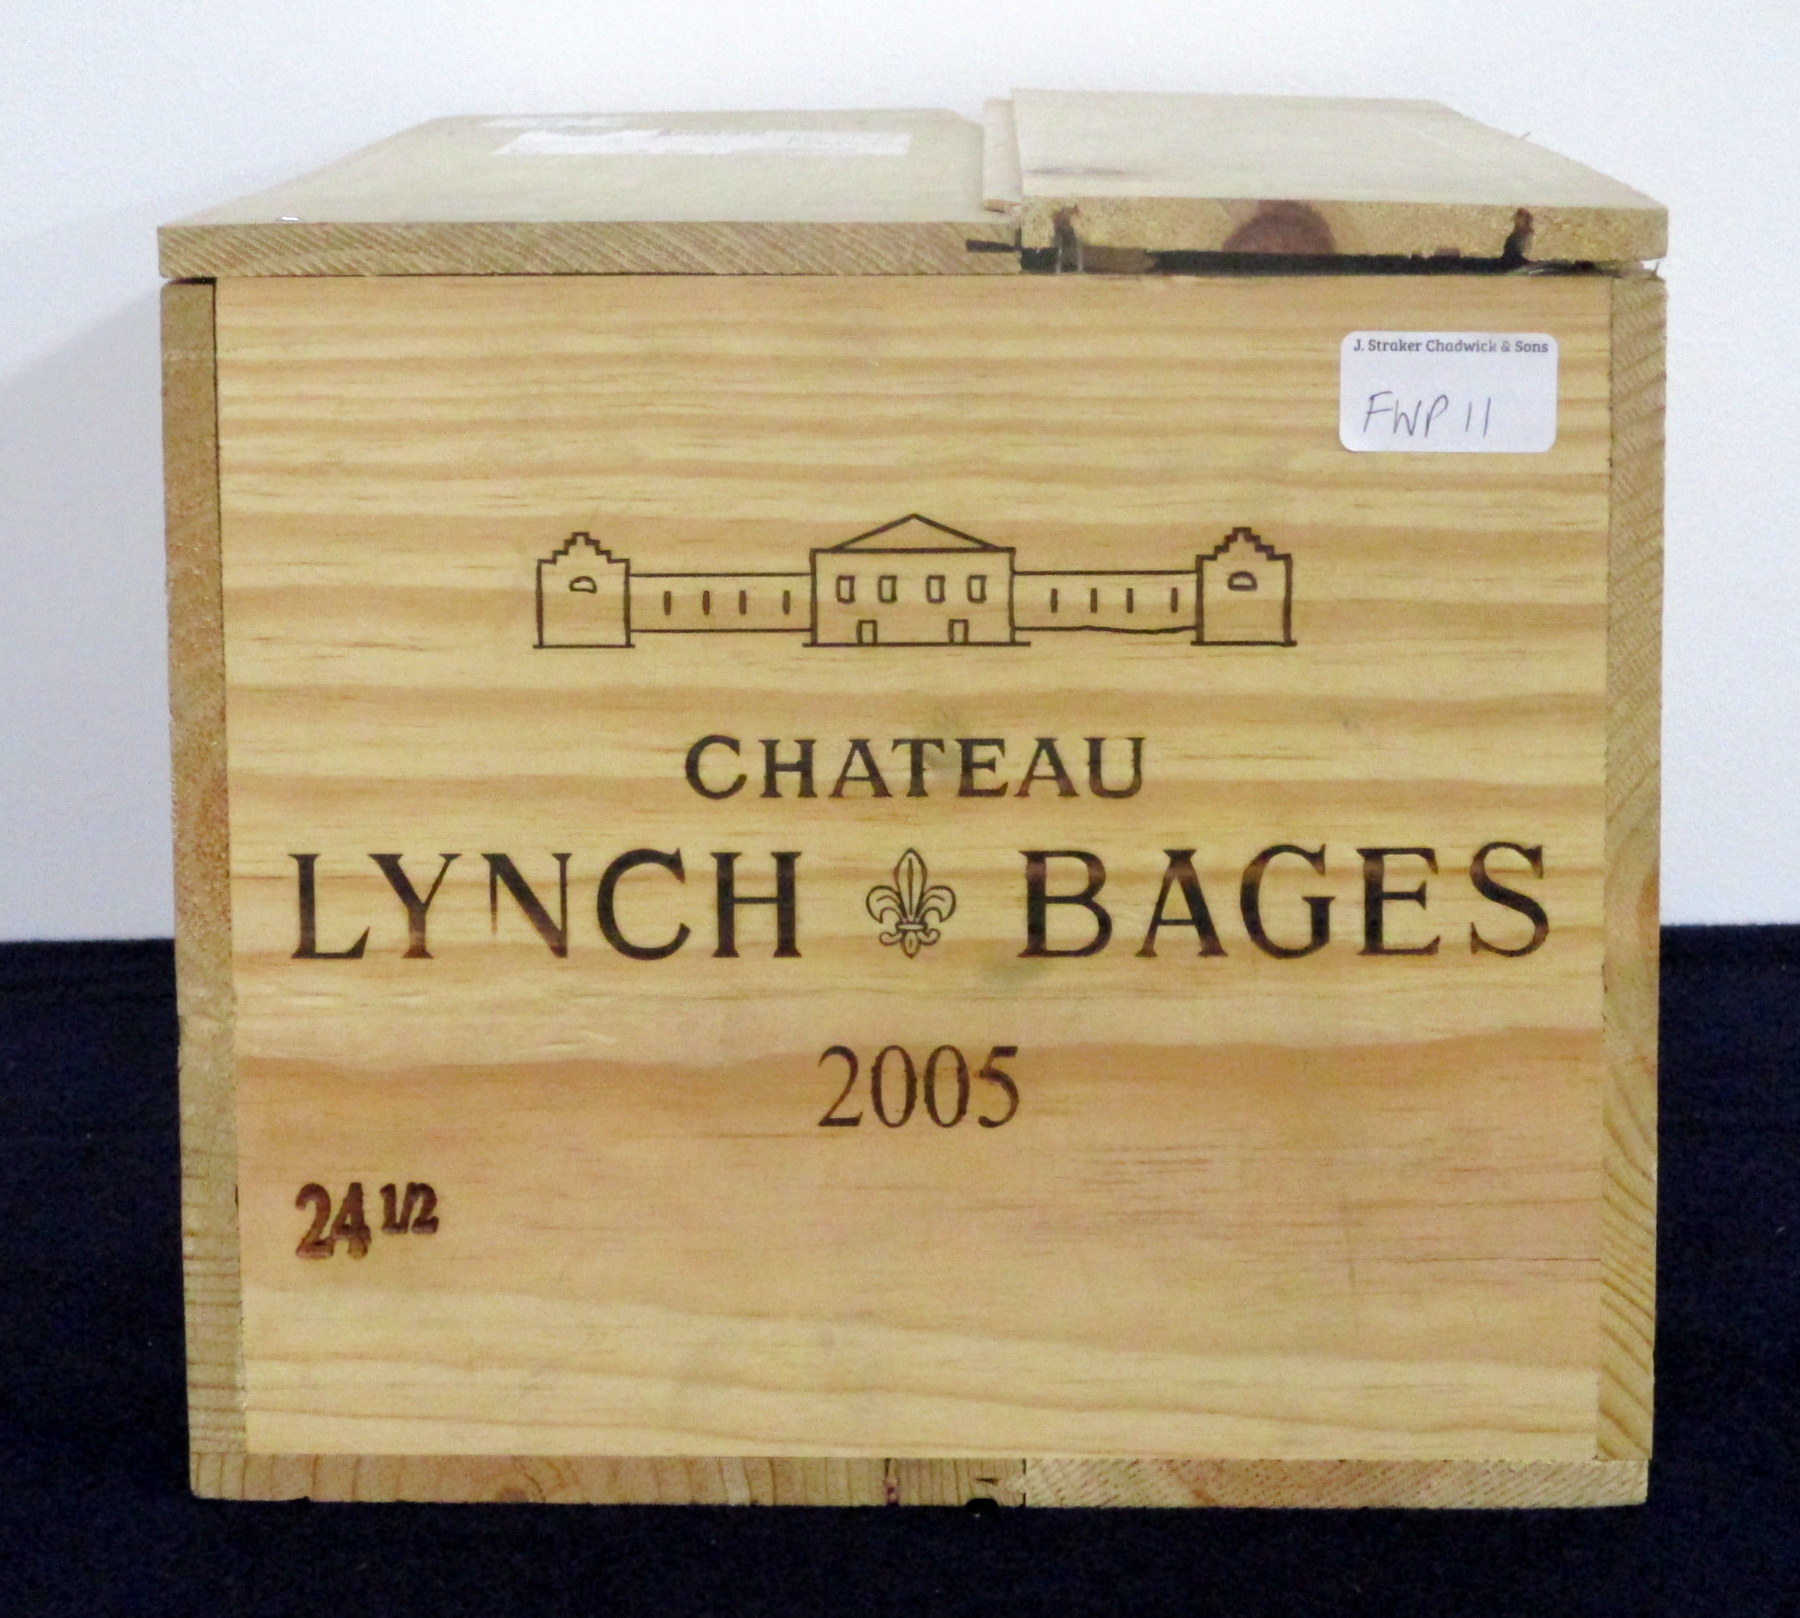 19 hf bts Ch. Lynch-Bages 2005 owc (24 hf bt) - sl split lid Pauillac, 5me Cru Classé